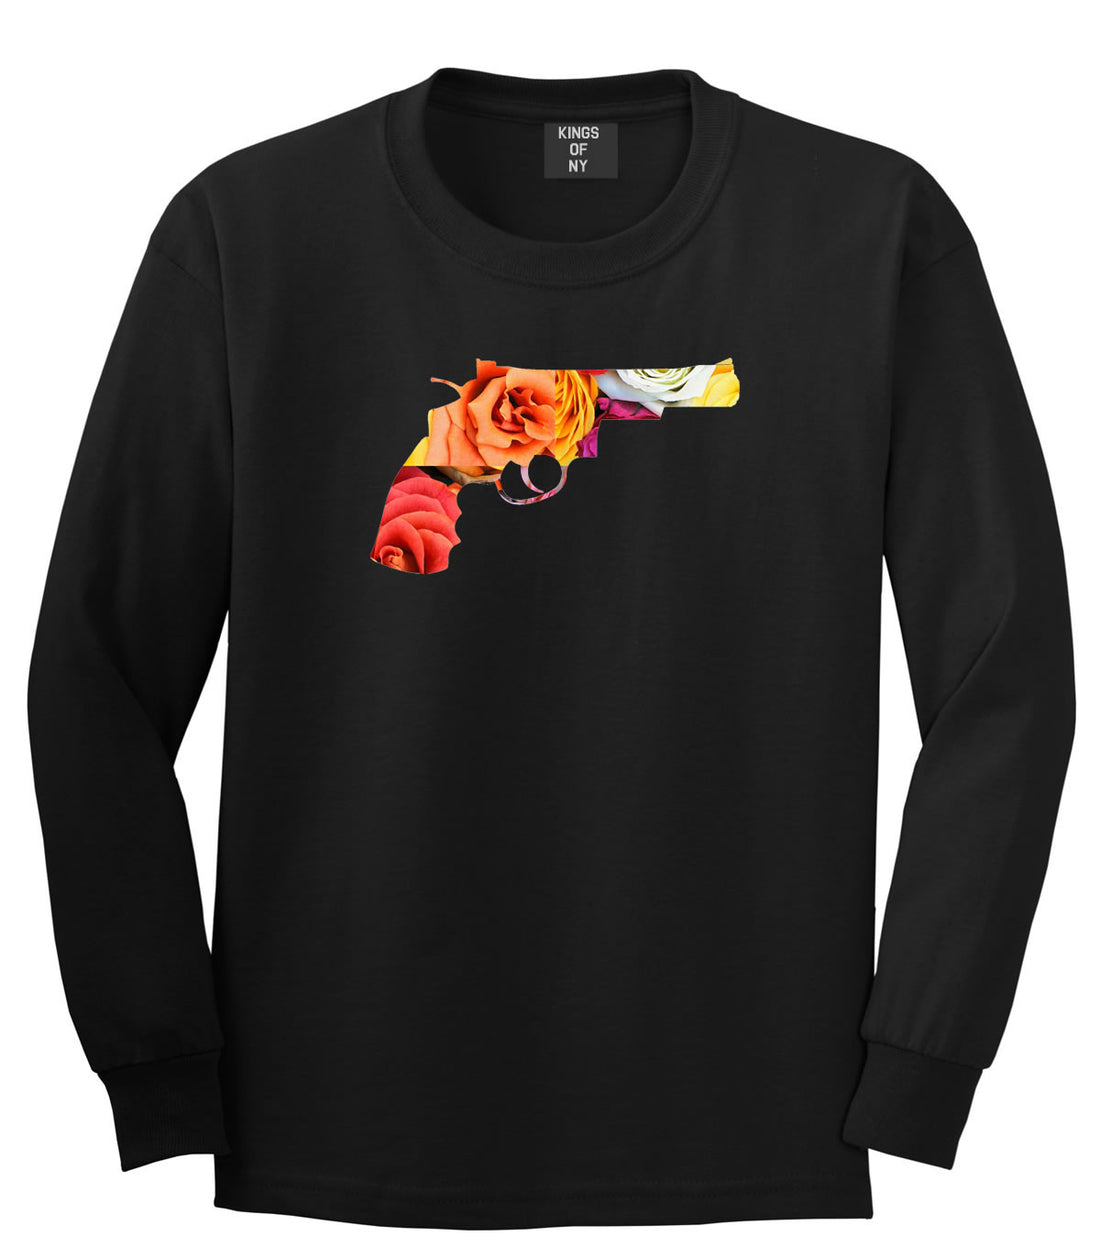 Floral Gun Flower Print Colt 45 Revolver Long Sleeve Boys Kids T-Shirt In Black by Kings Of NY